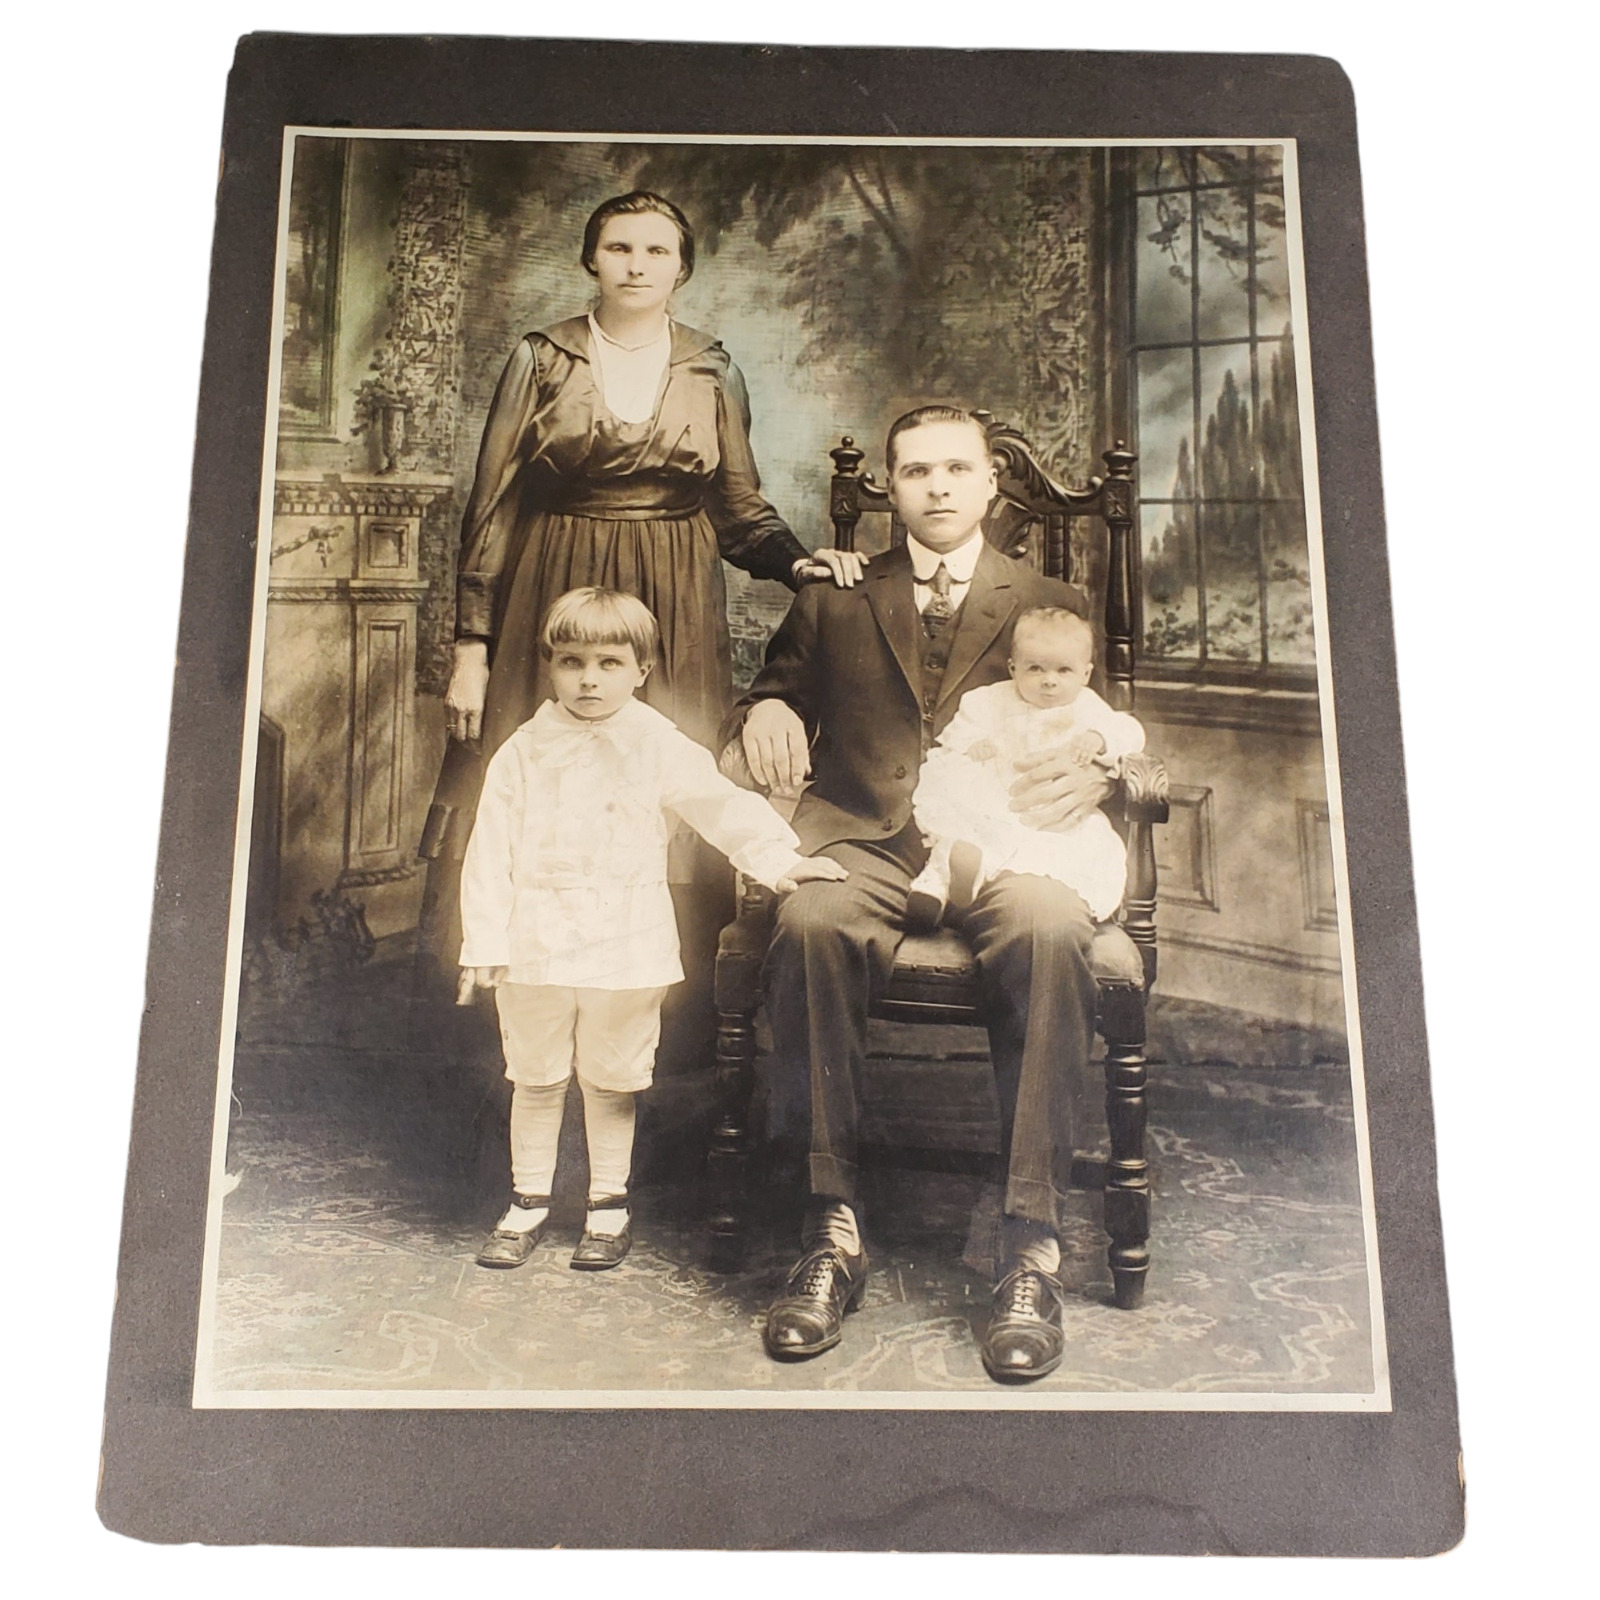 VTG Antique 1910s Family Photo Portrait 20x16 Matted Eerie Somber Creepy Toddler